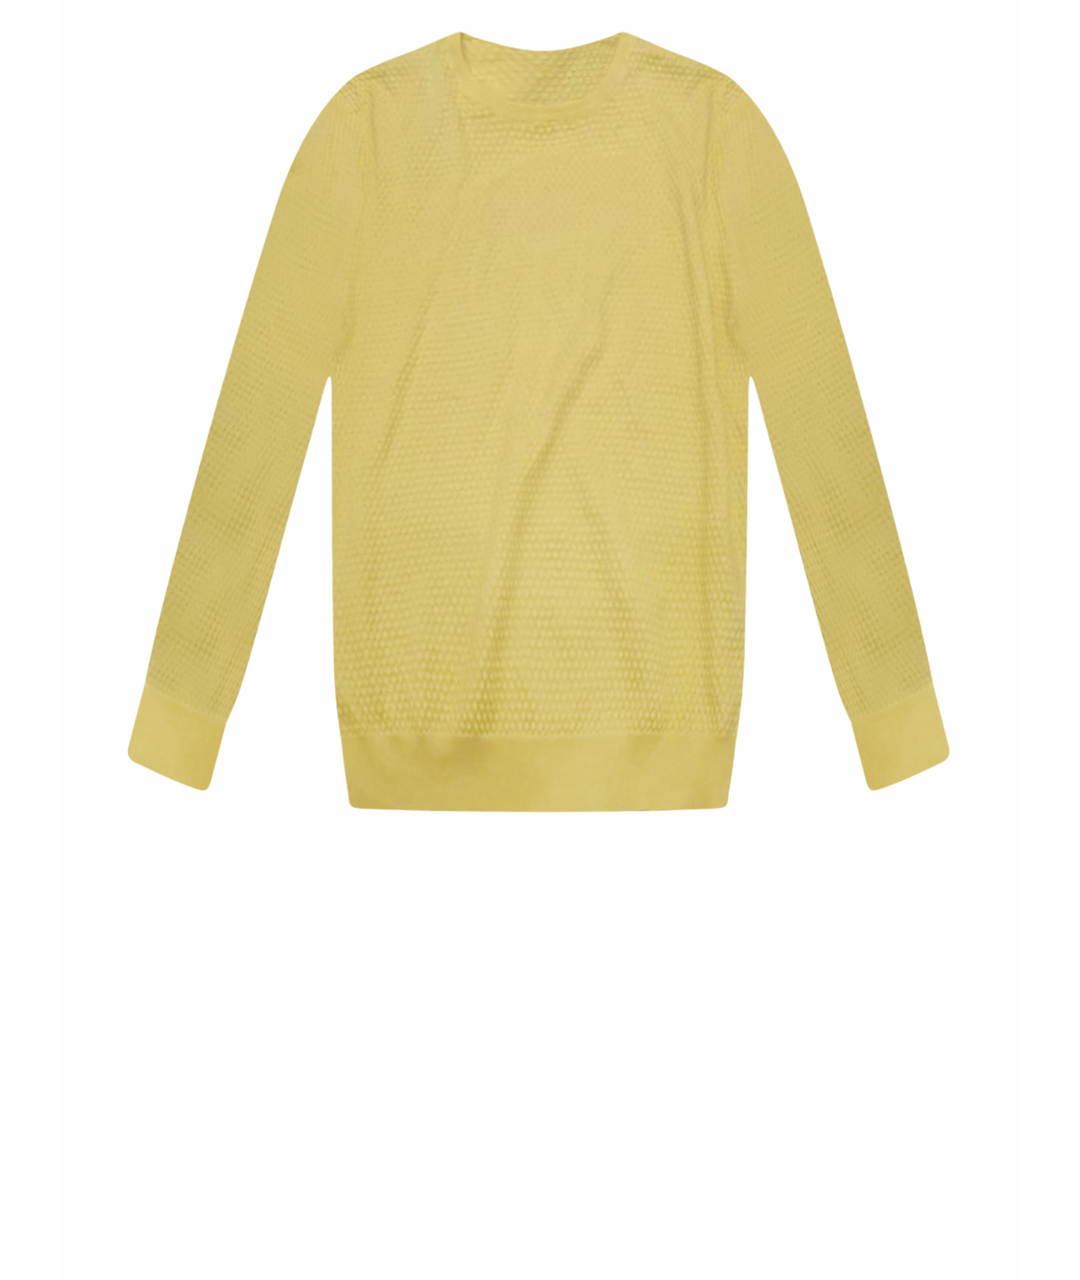 GRAN SASSO Желтый хлопковый джемпер / свитер, фото 1